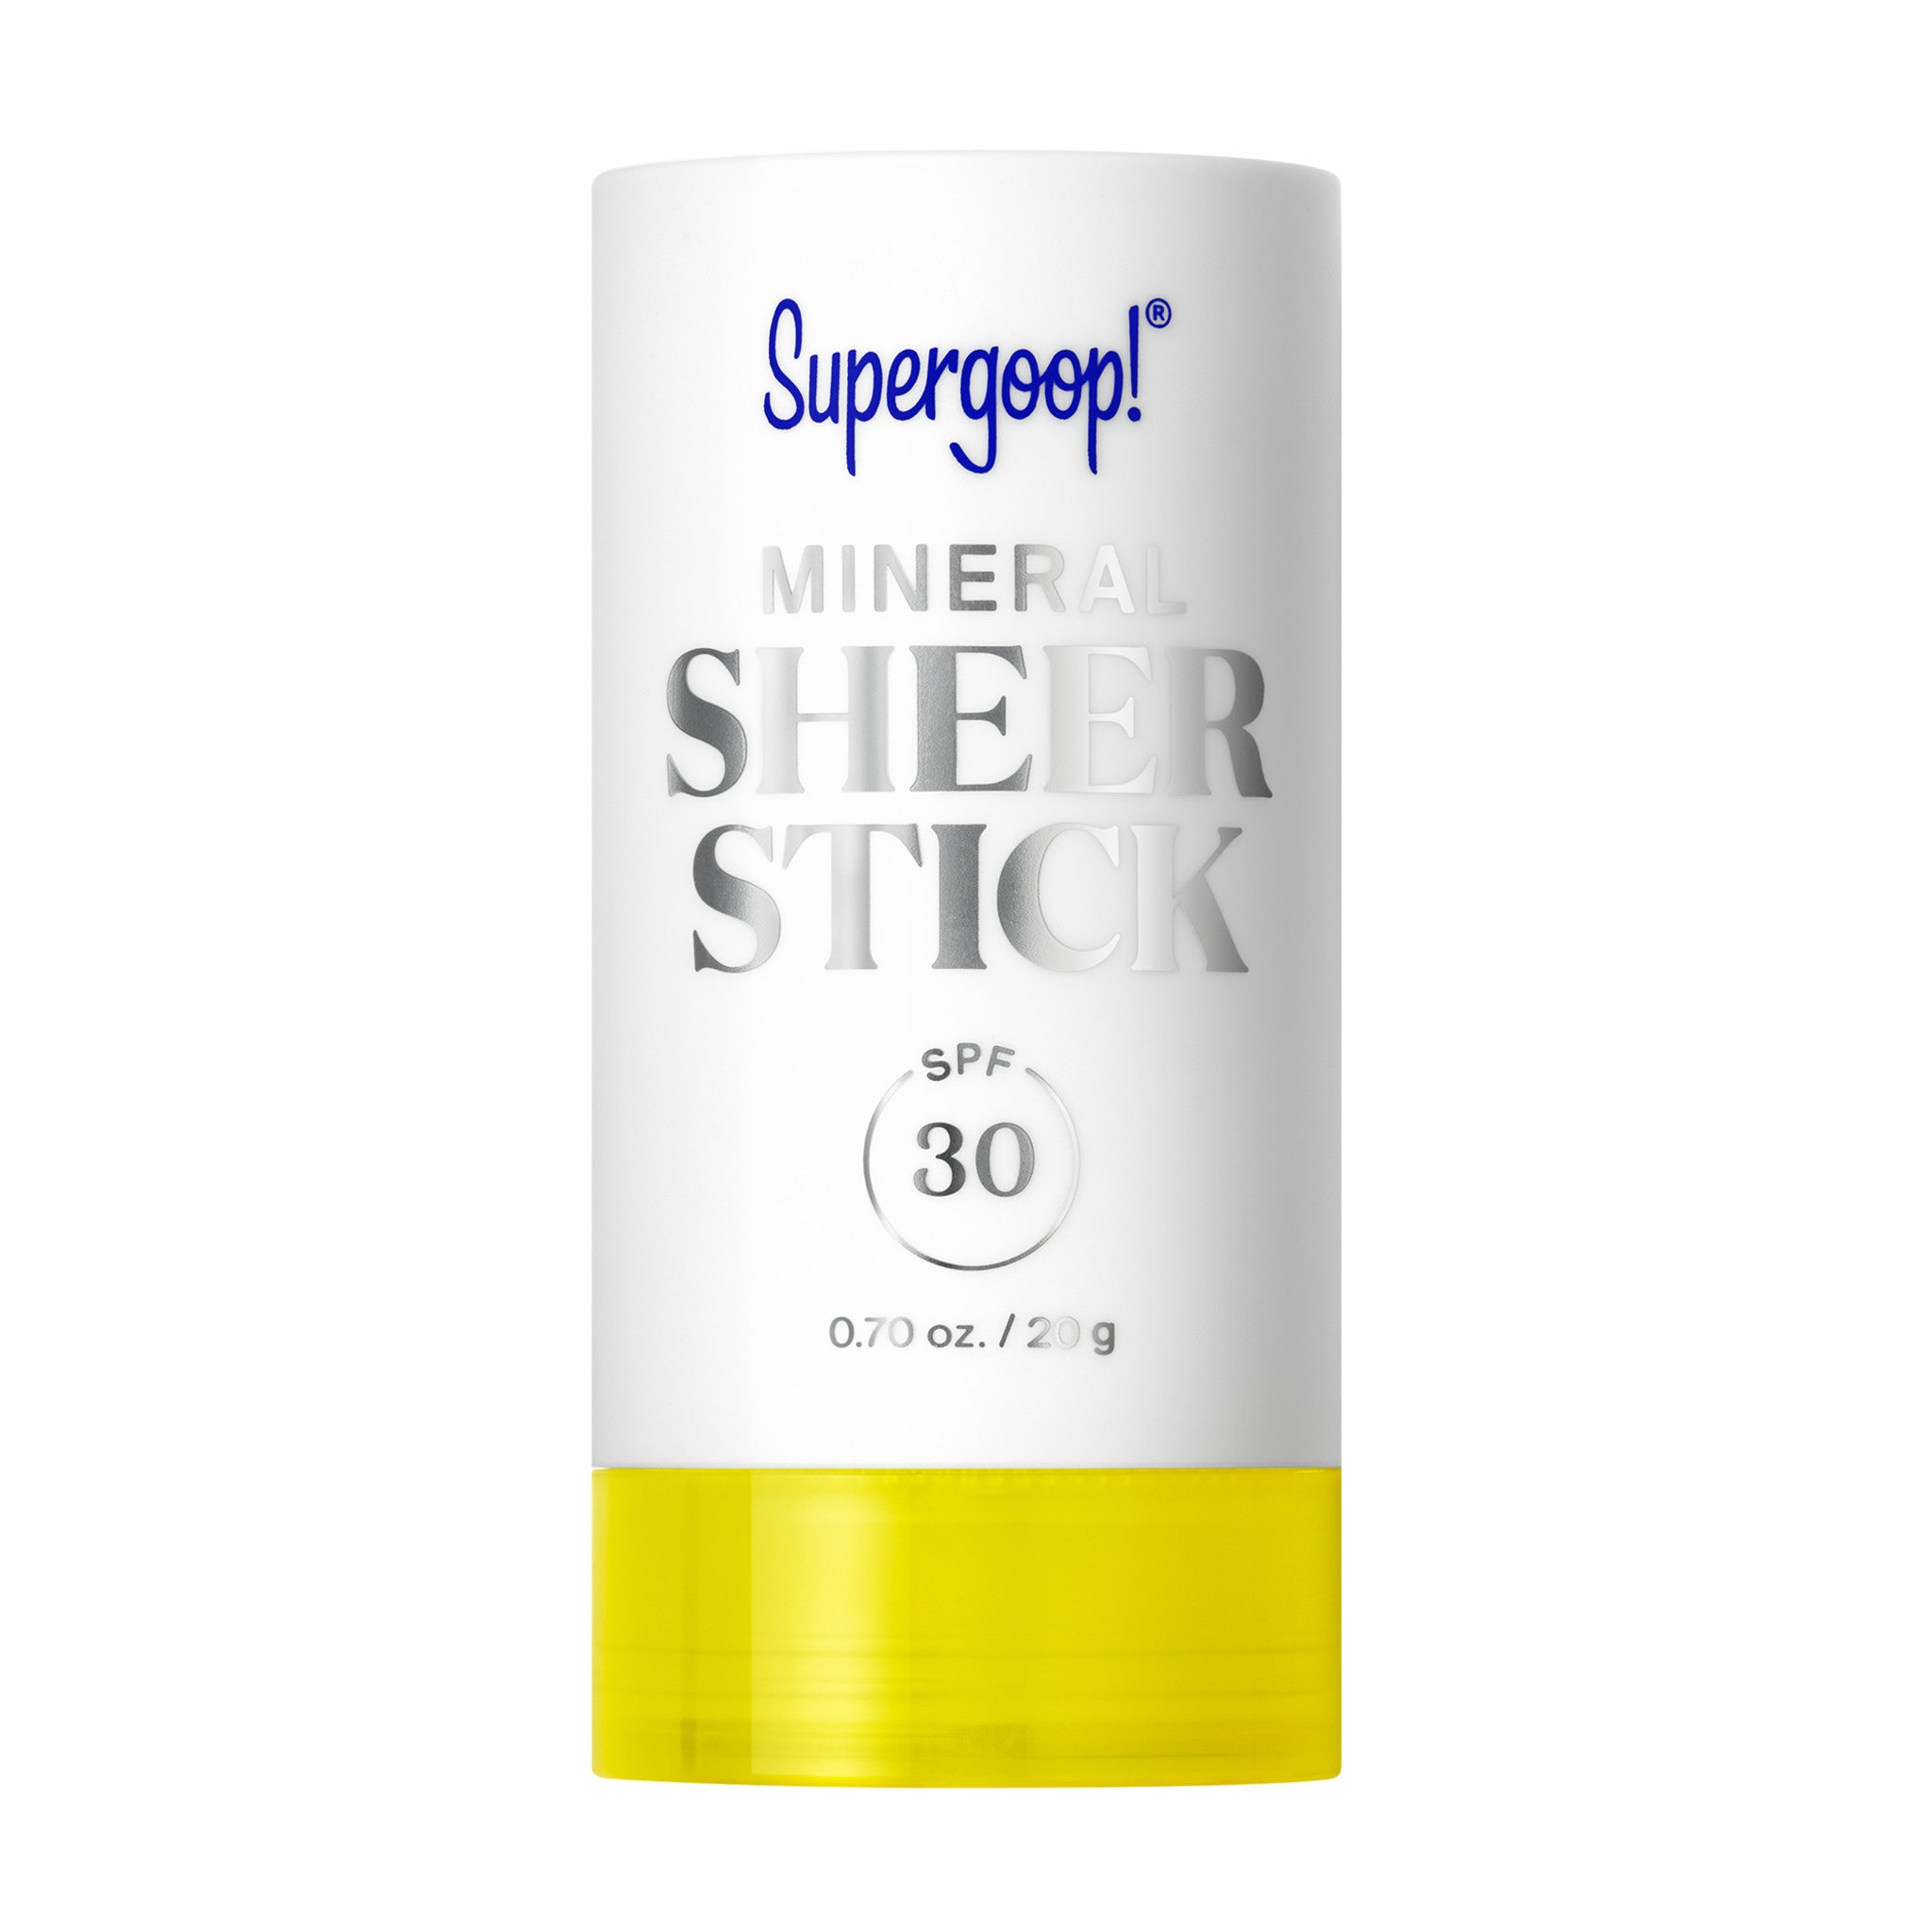 Supergoop! Mineral Sheer Stick SPF 30 main image.